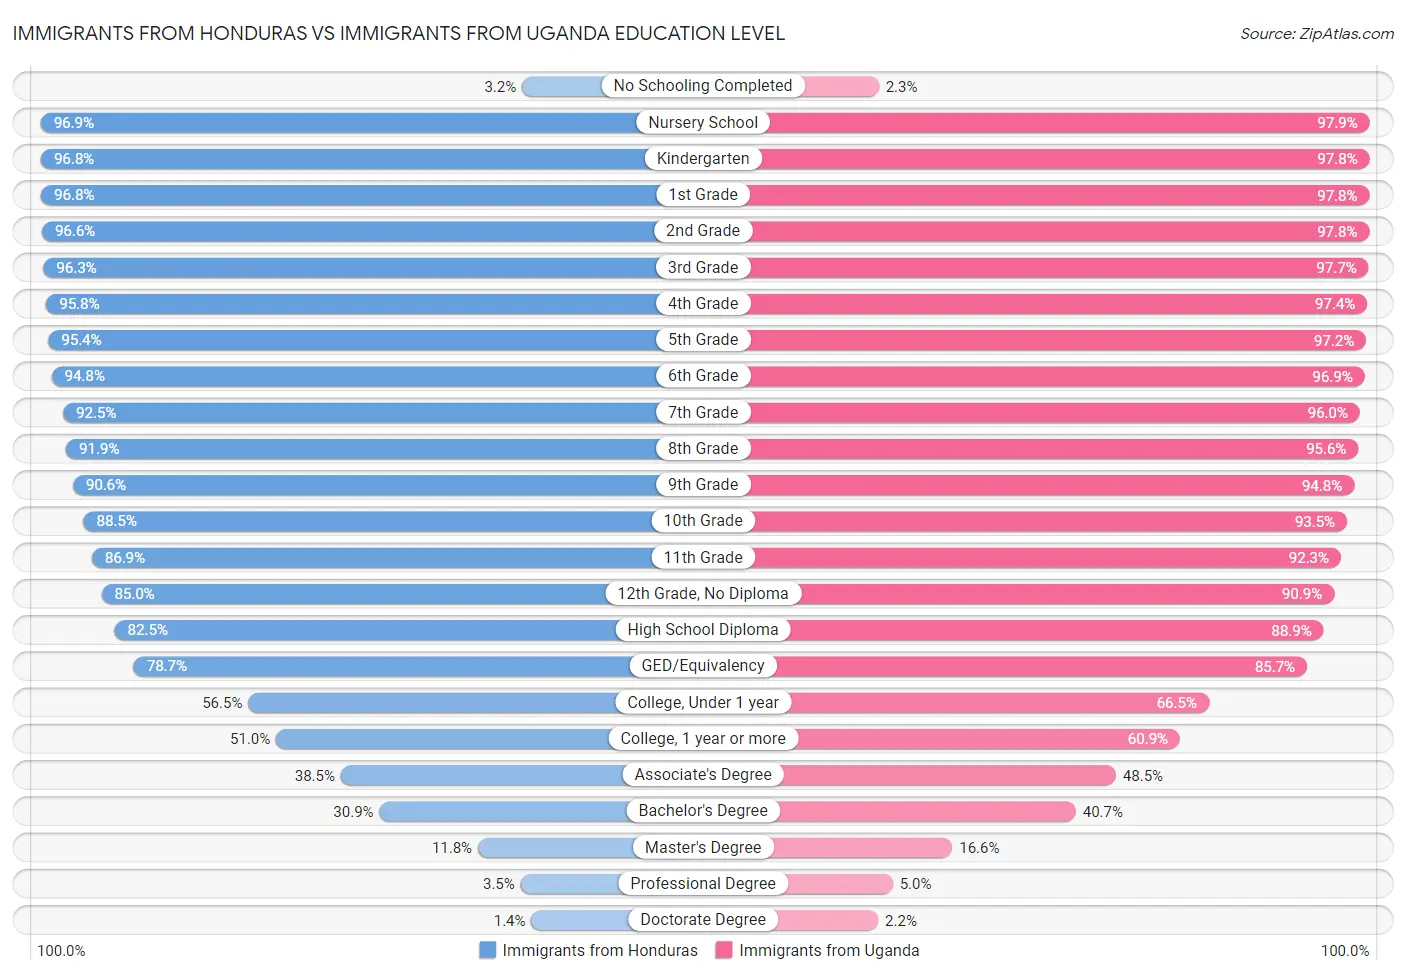 Immigrants from Honduras vs Immigrants from Uganda Education Level